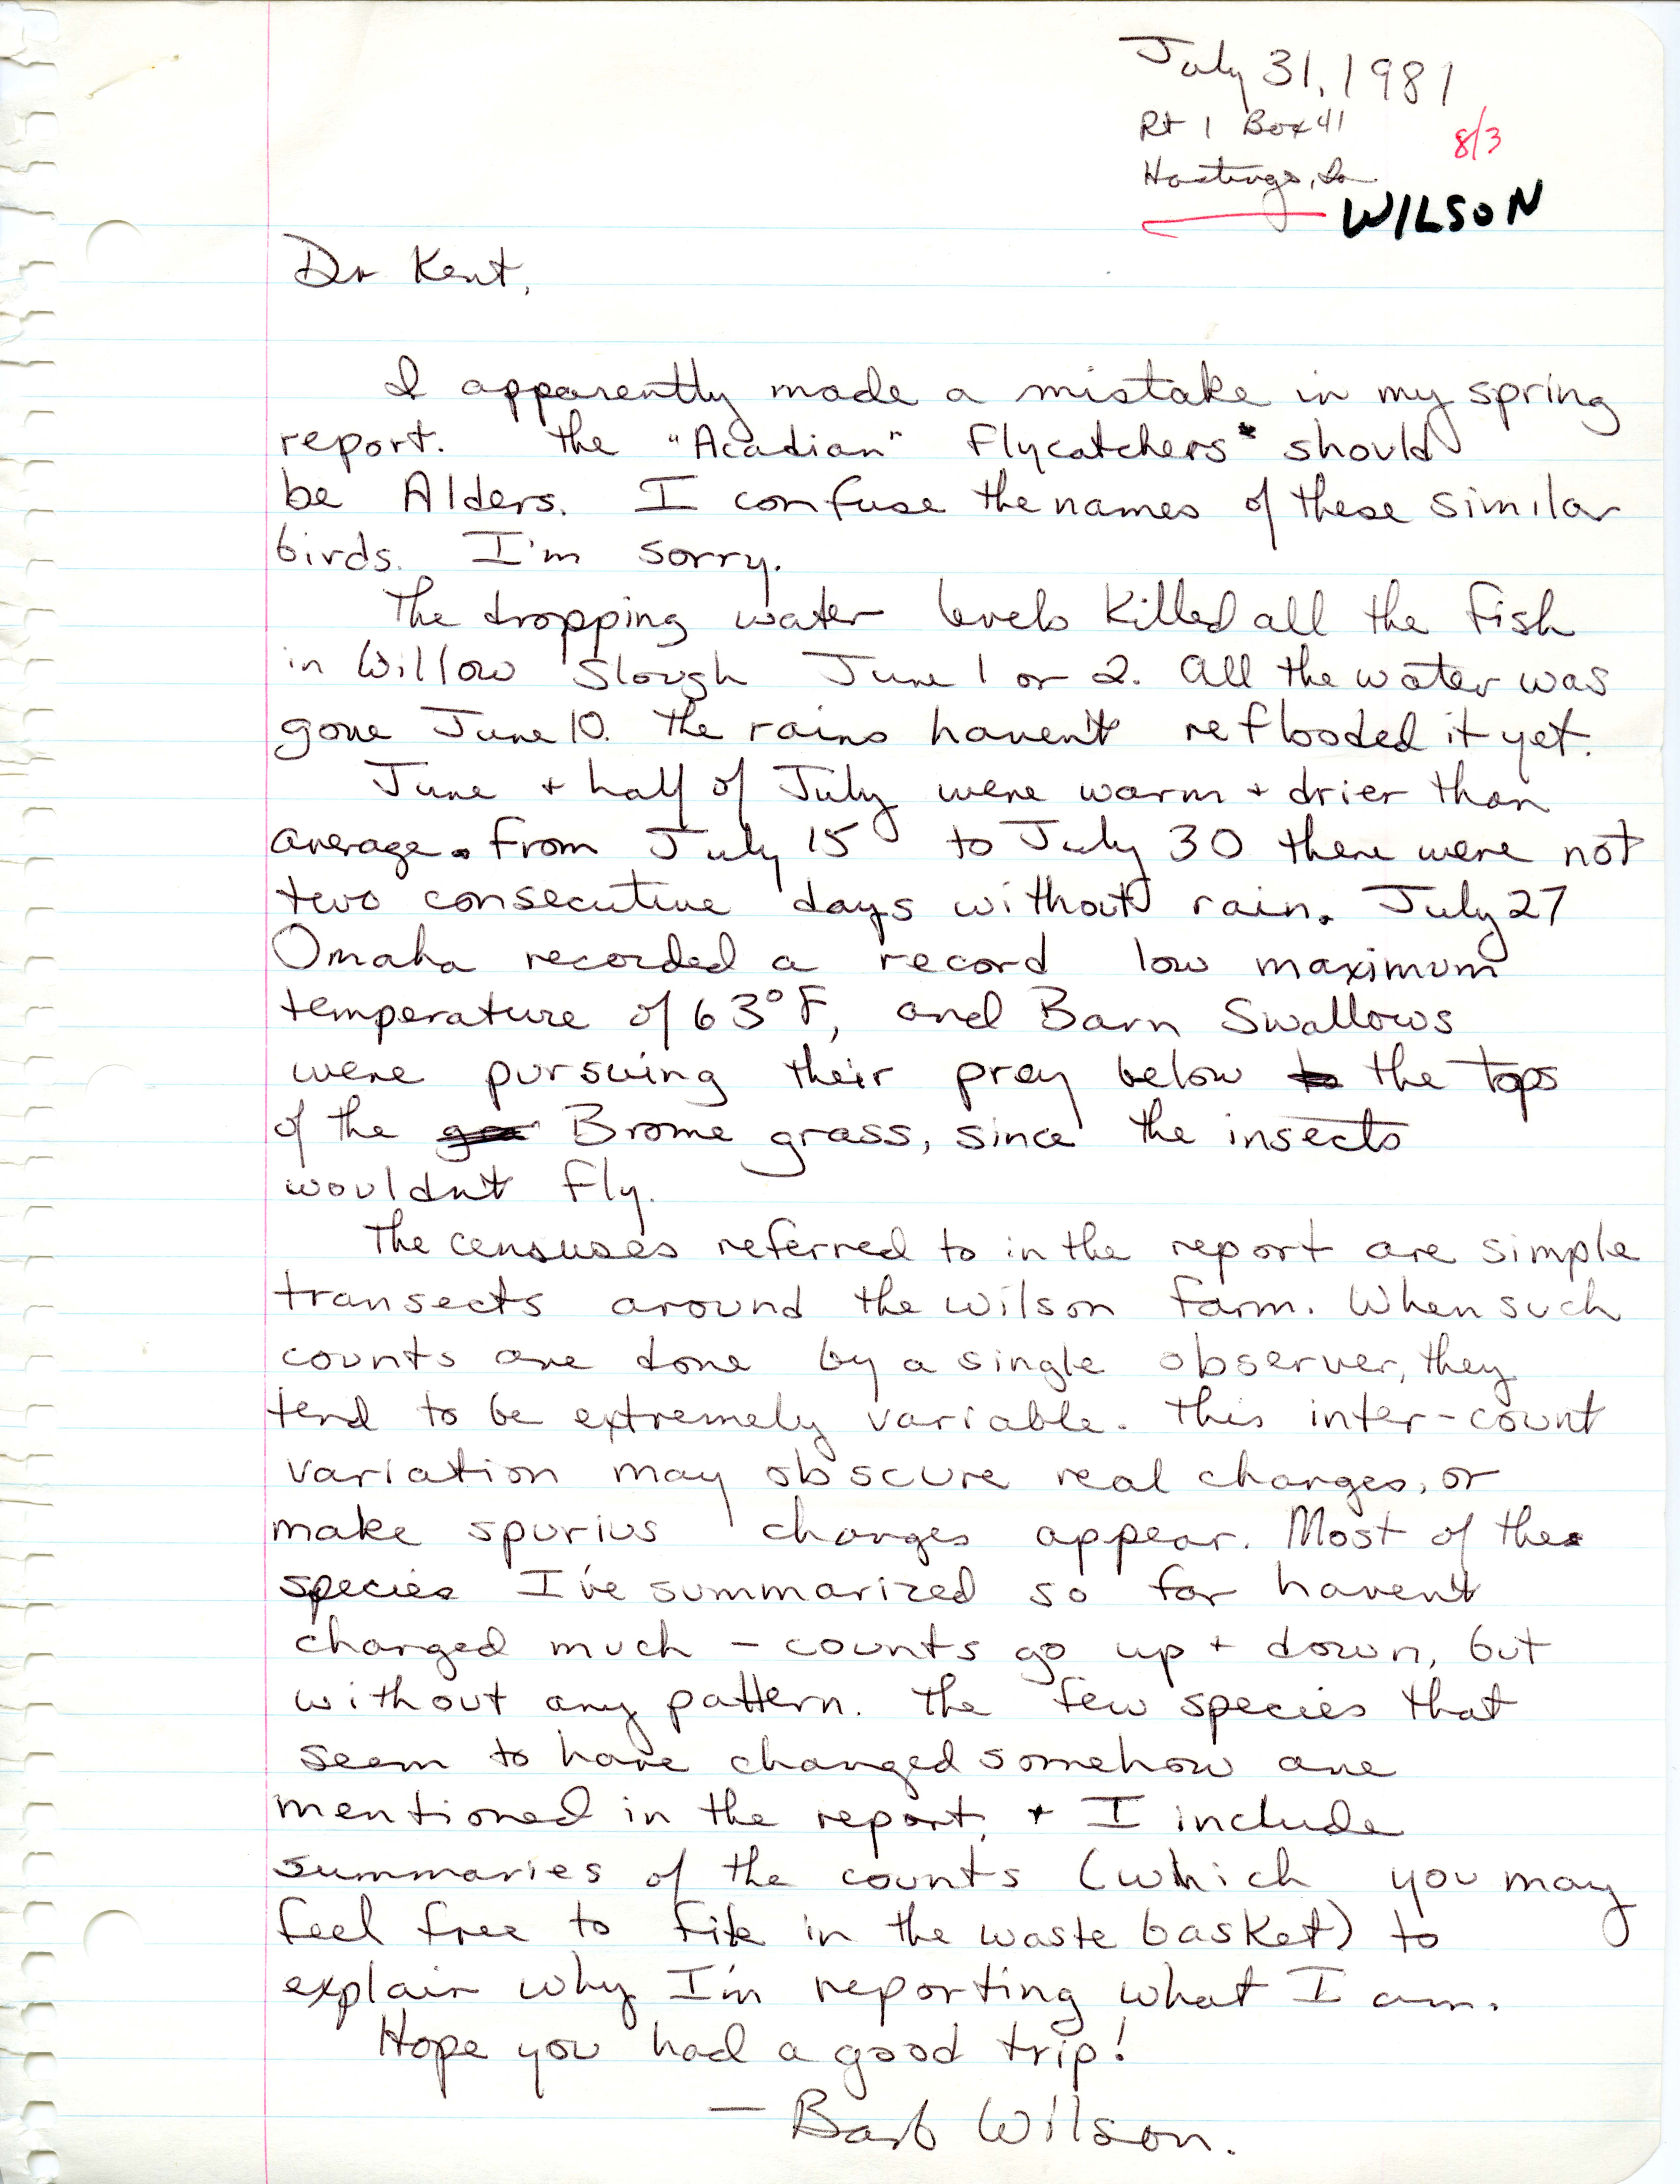 Barbara L. Wilson letter to Thomas H. Kent regarding summer bird sightings and populations, July 31, 1981